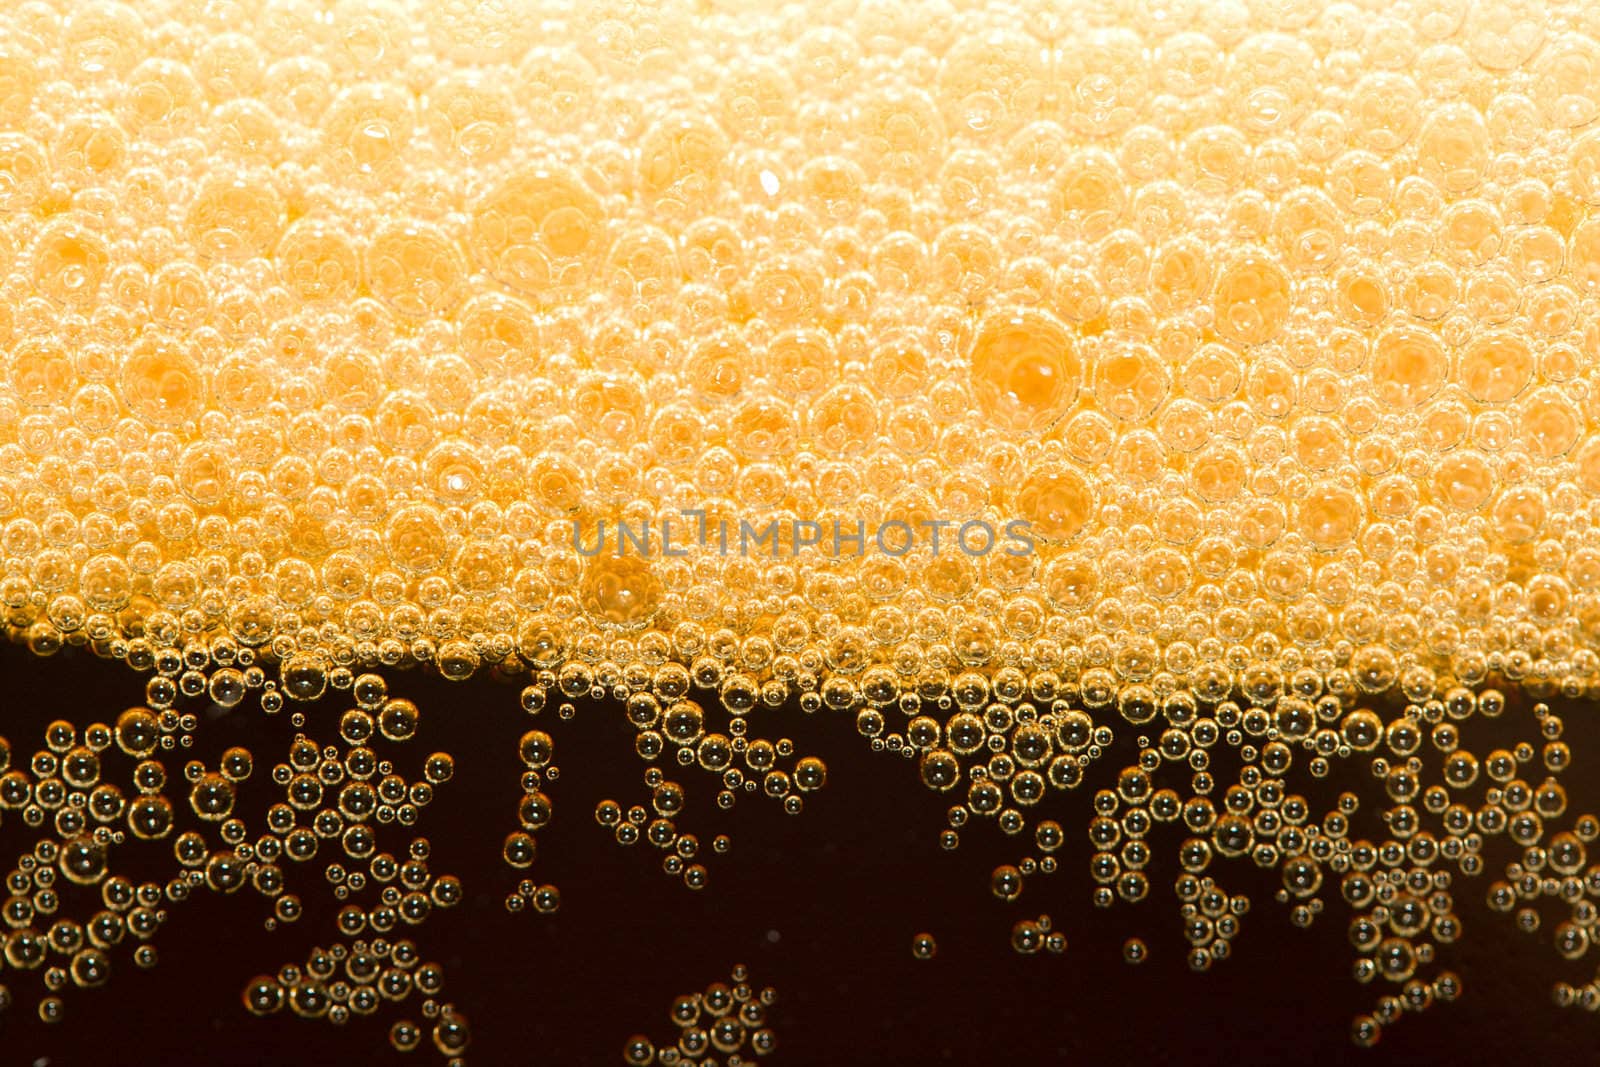 close-up dark beer with foam by Alekcey